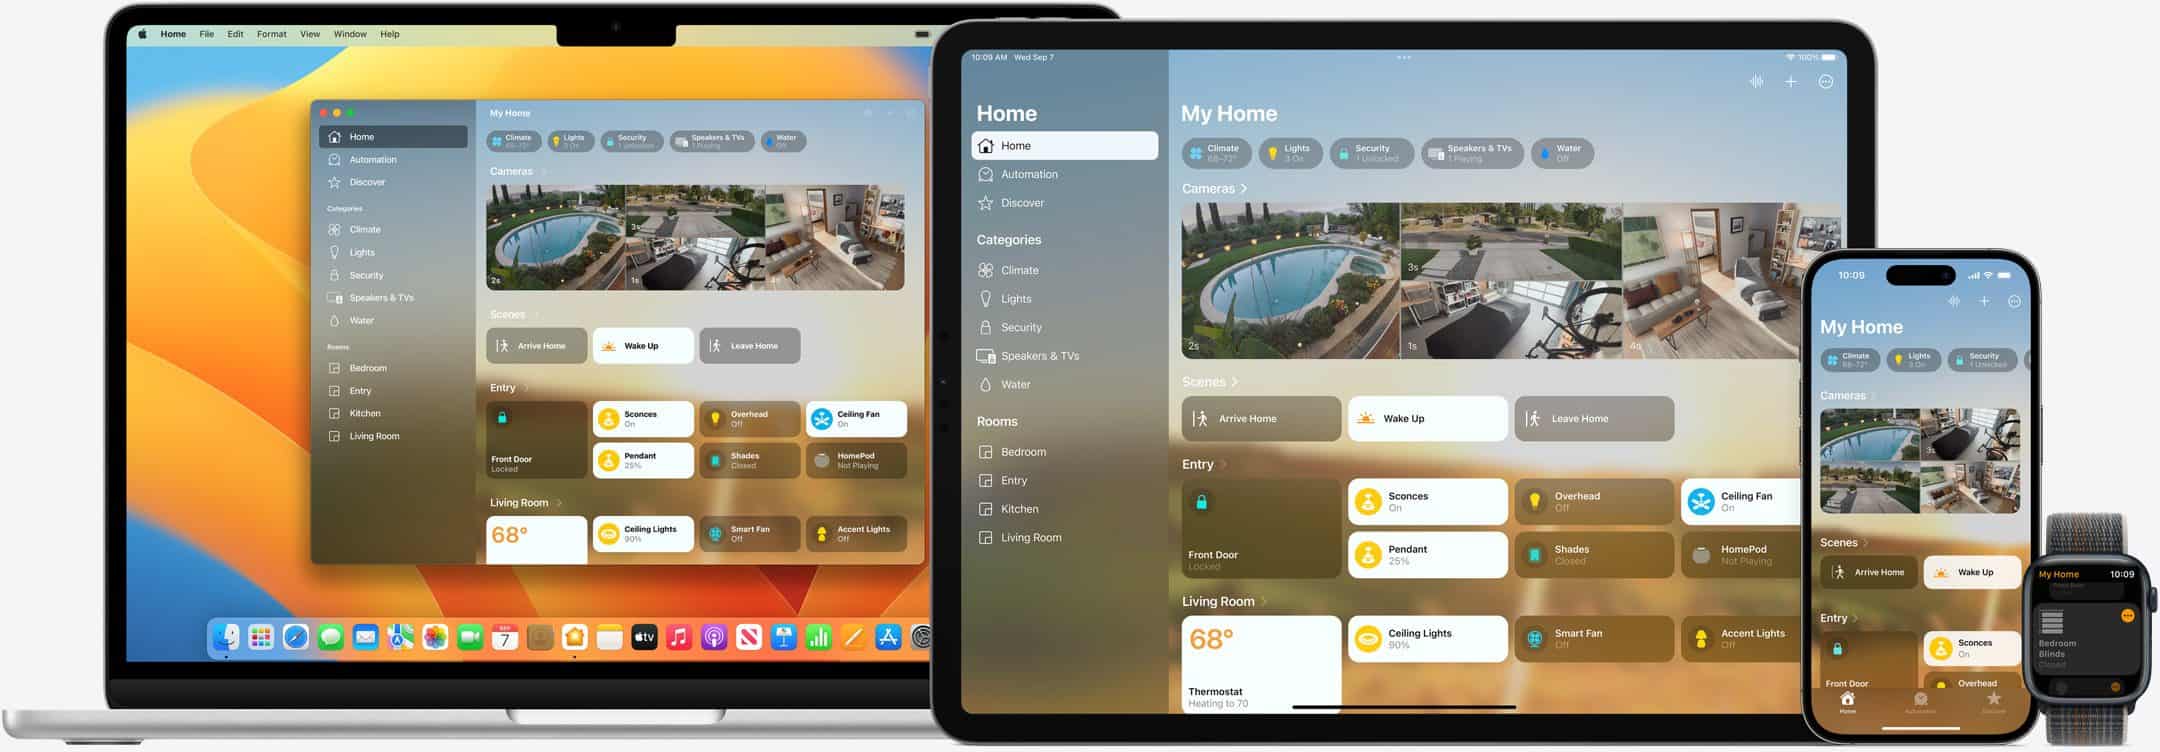 Woning-app voor HomeKit in iOS 16, iPadOS 16, macOS Ventura en watchOS 9